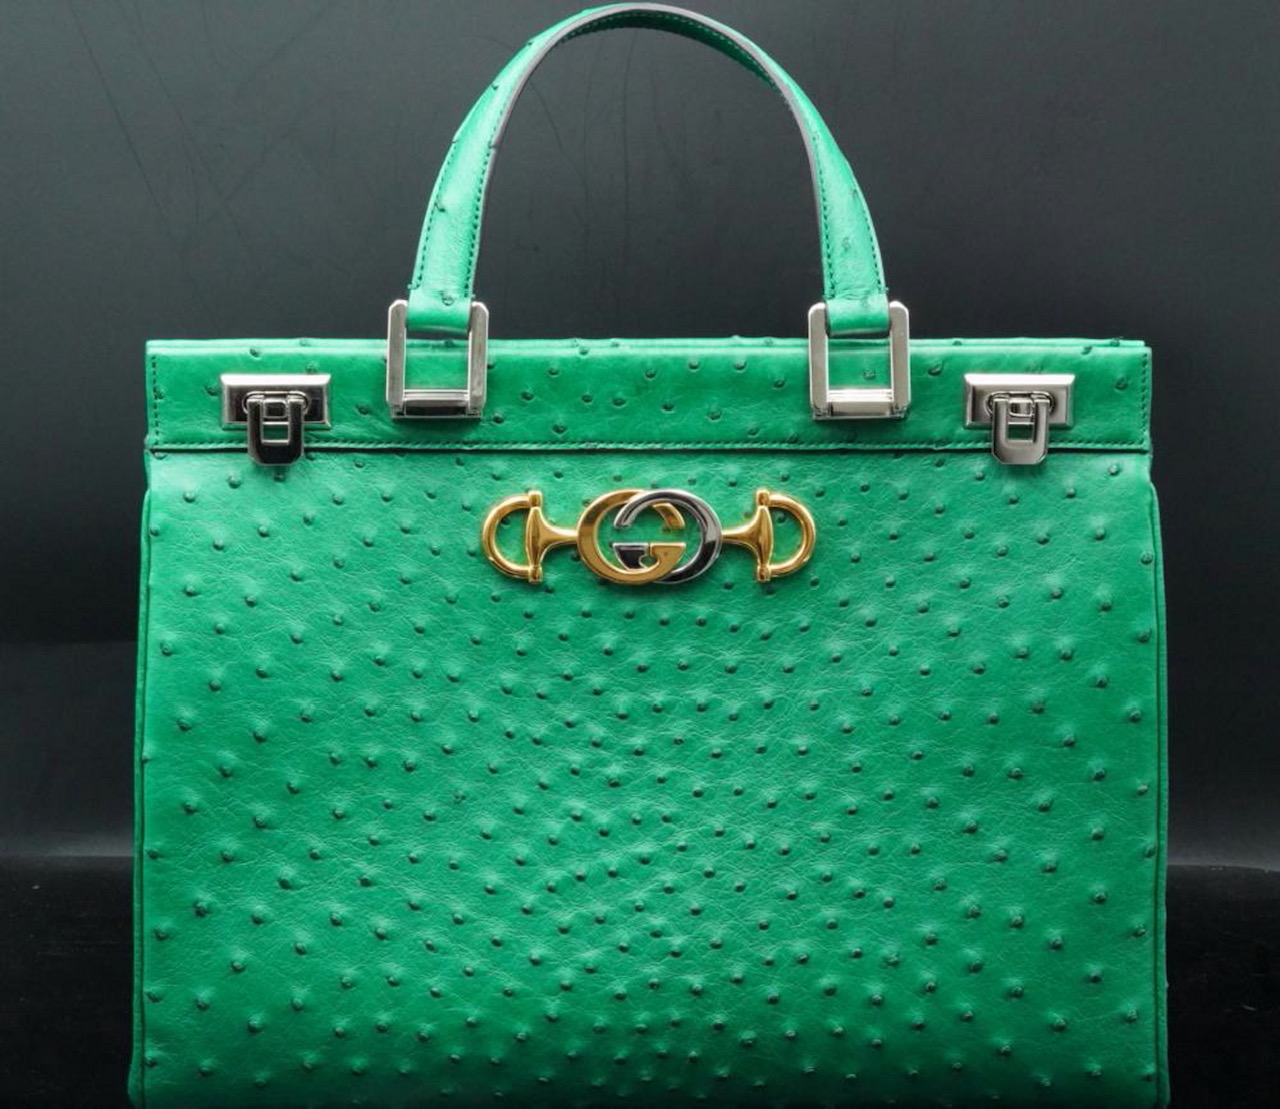 Kruse GWS Auction | Rare Designer Handbag and Jewelry Auction